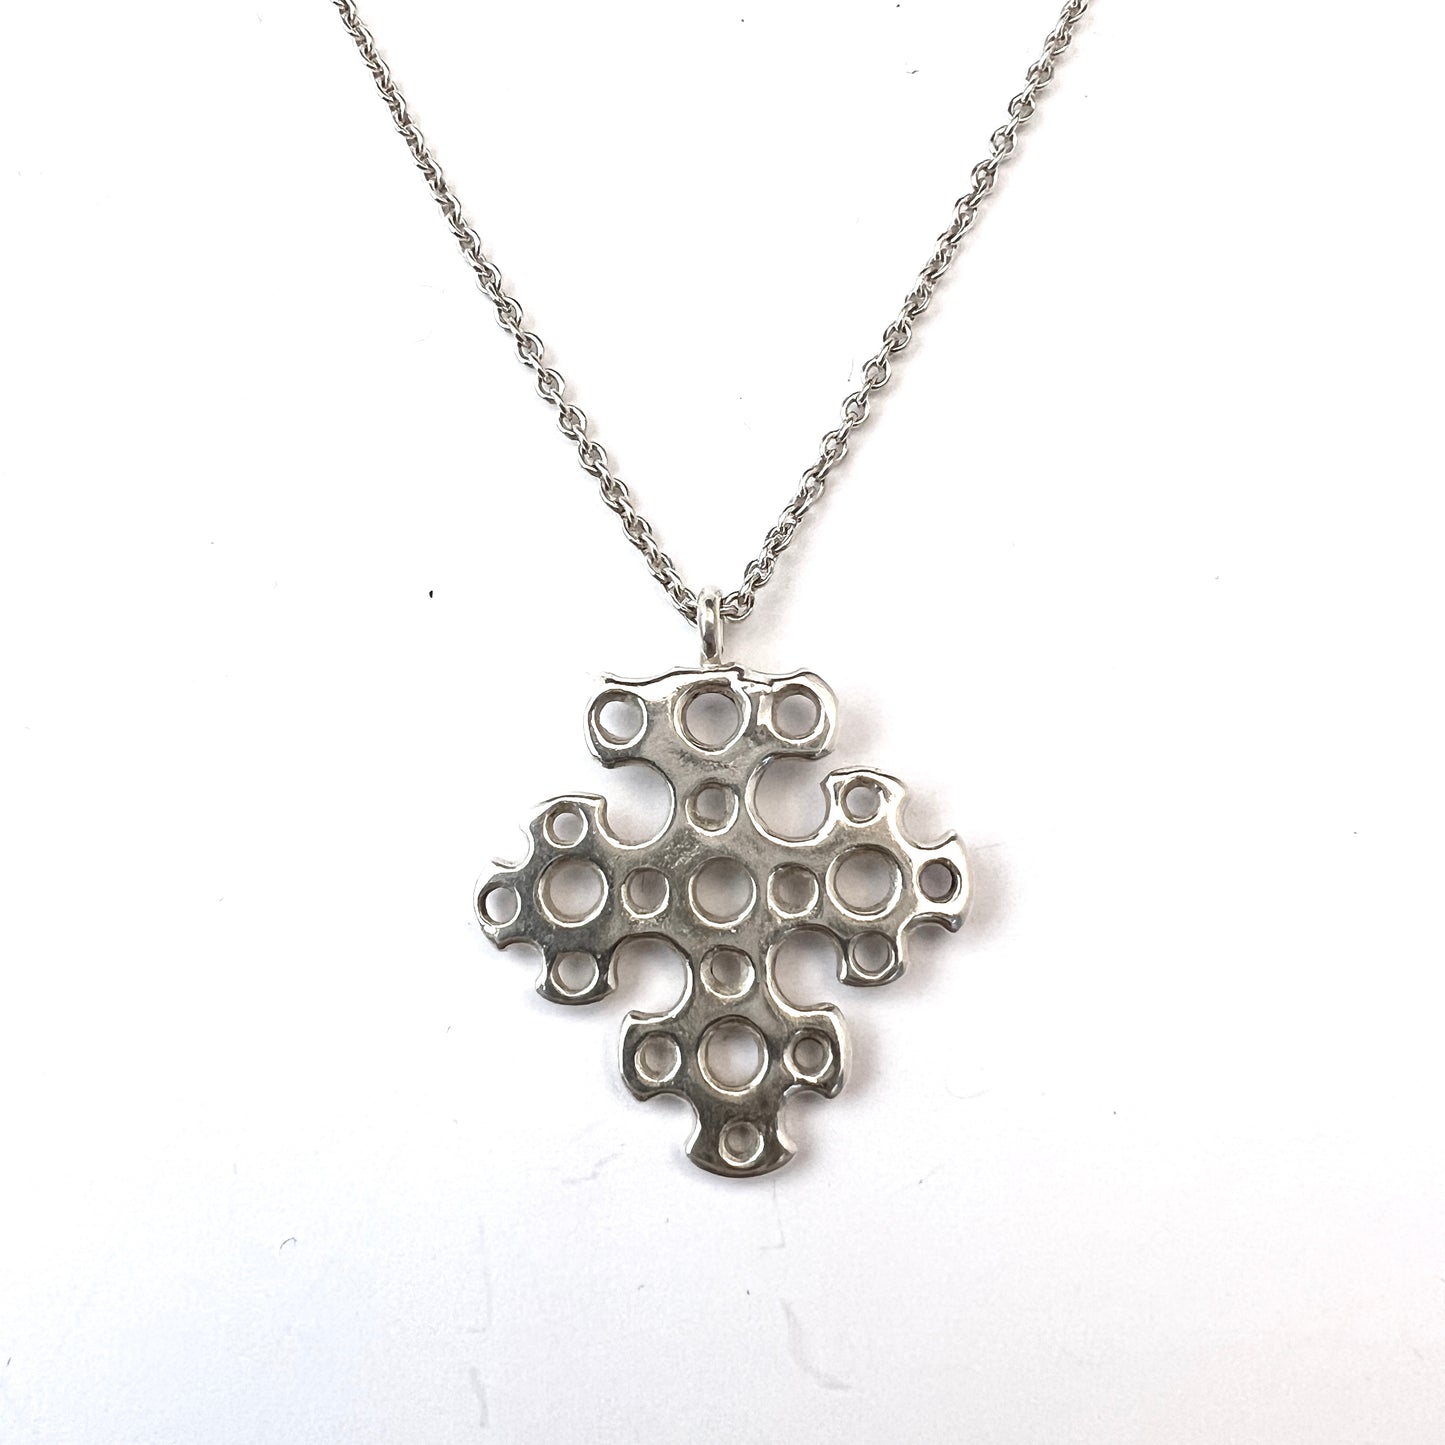 Juhls Kautokeino, Norway Vintage Sterling Silver Pendant Necklace.